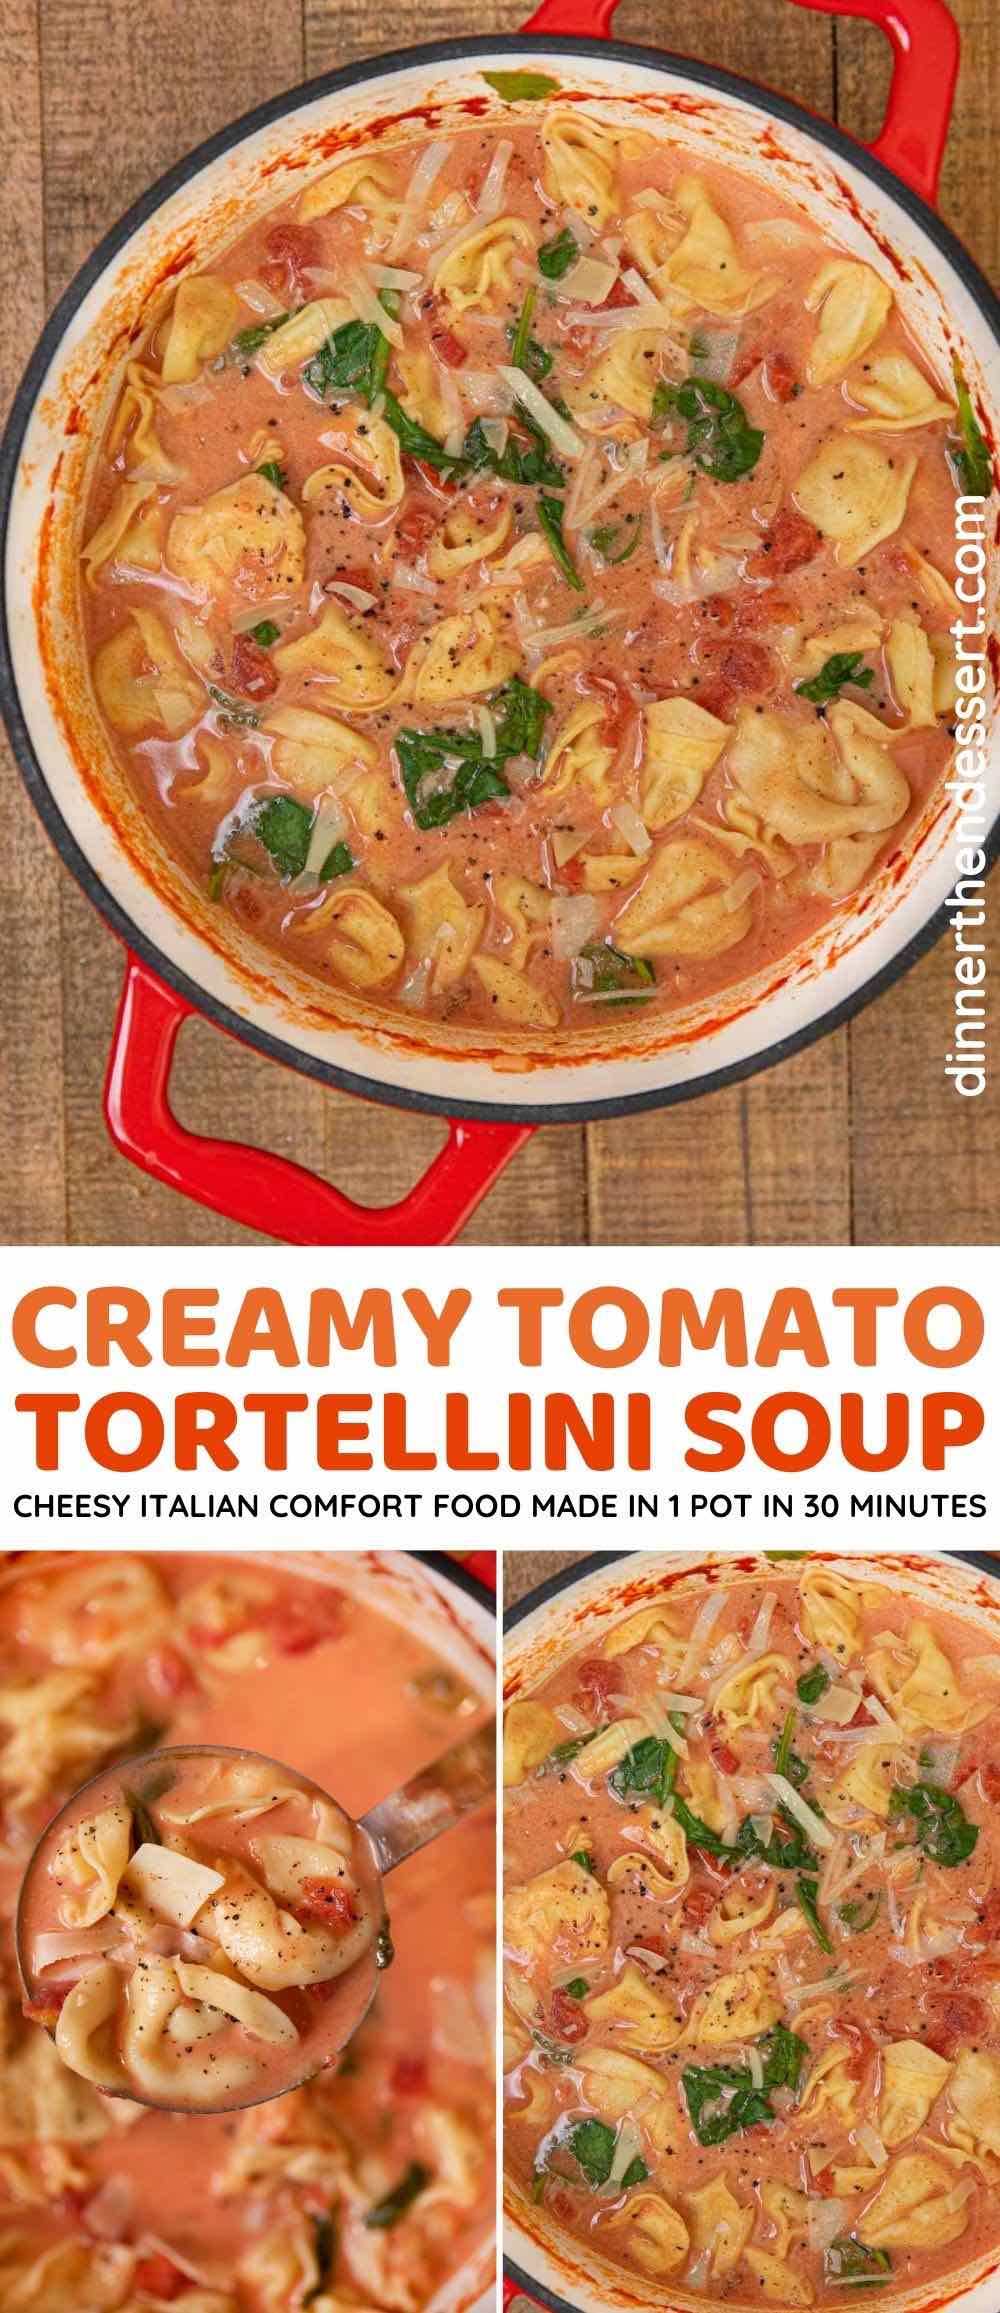 https://dinnerthendessert.com/wp-content/uploads/2021/12/Creamy-Tomato-Tortellini-Soup-L.jpg